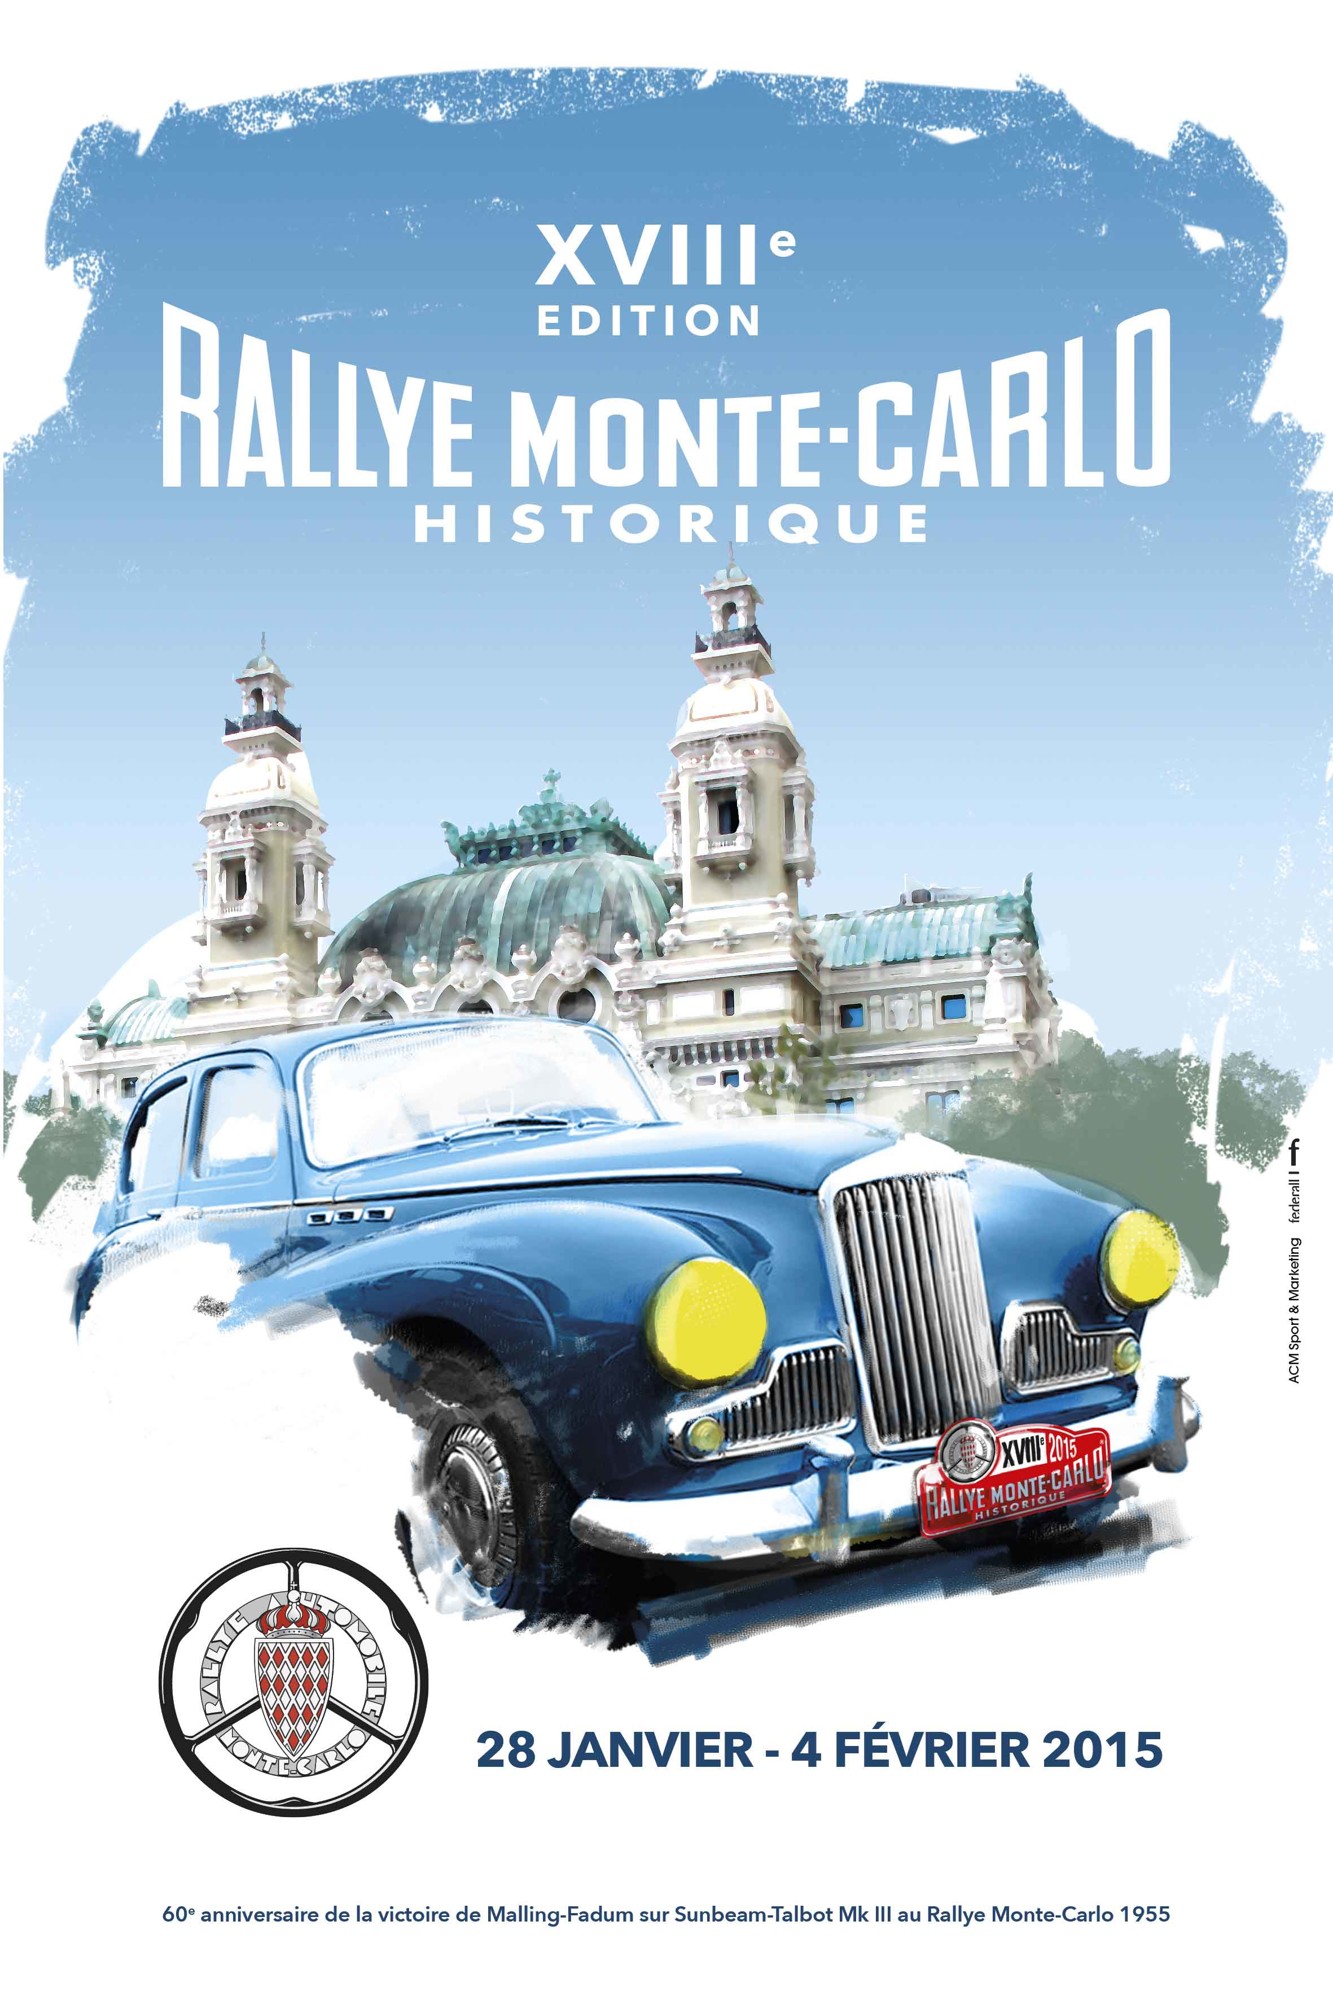 Rallye Monte Carlo 2015